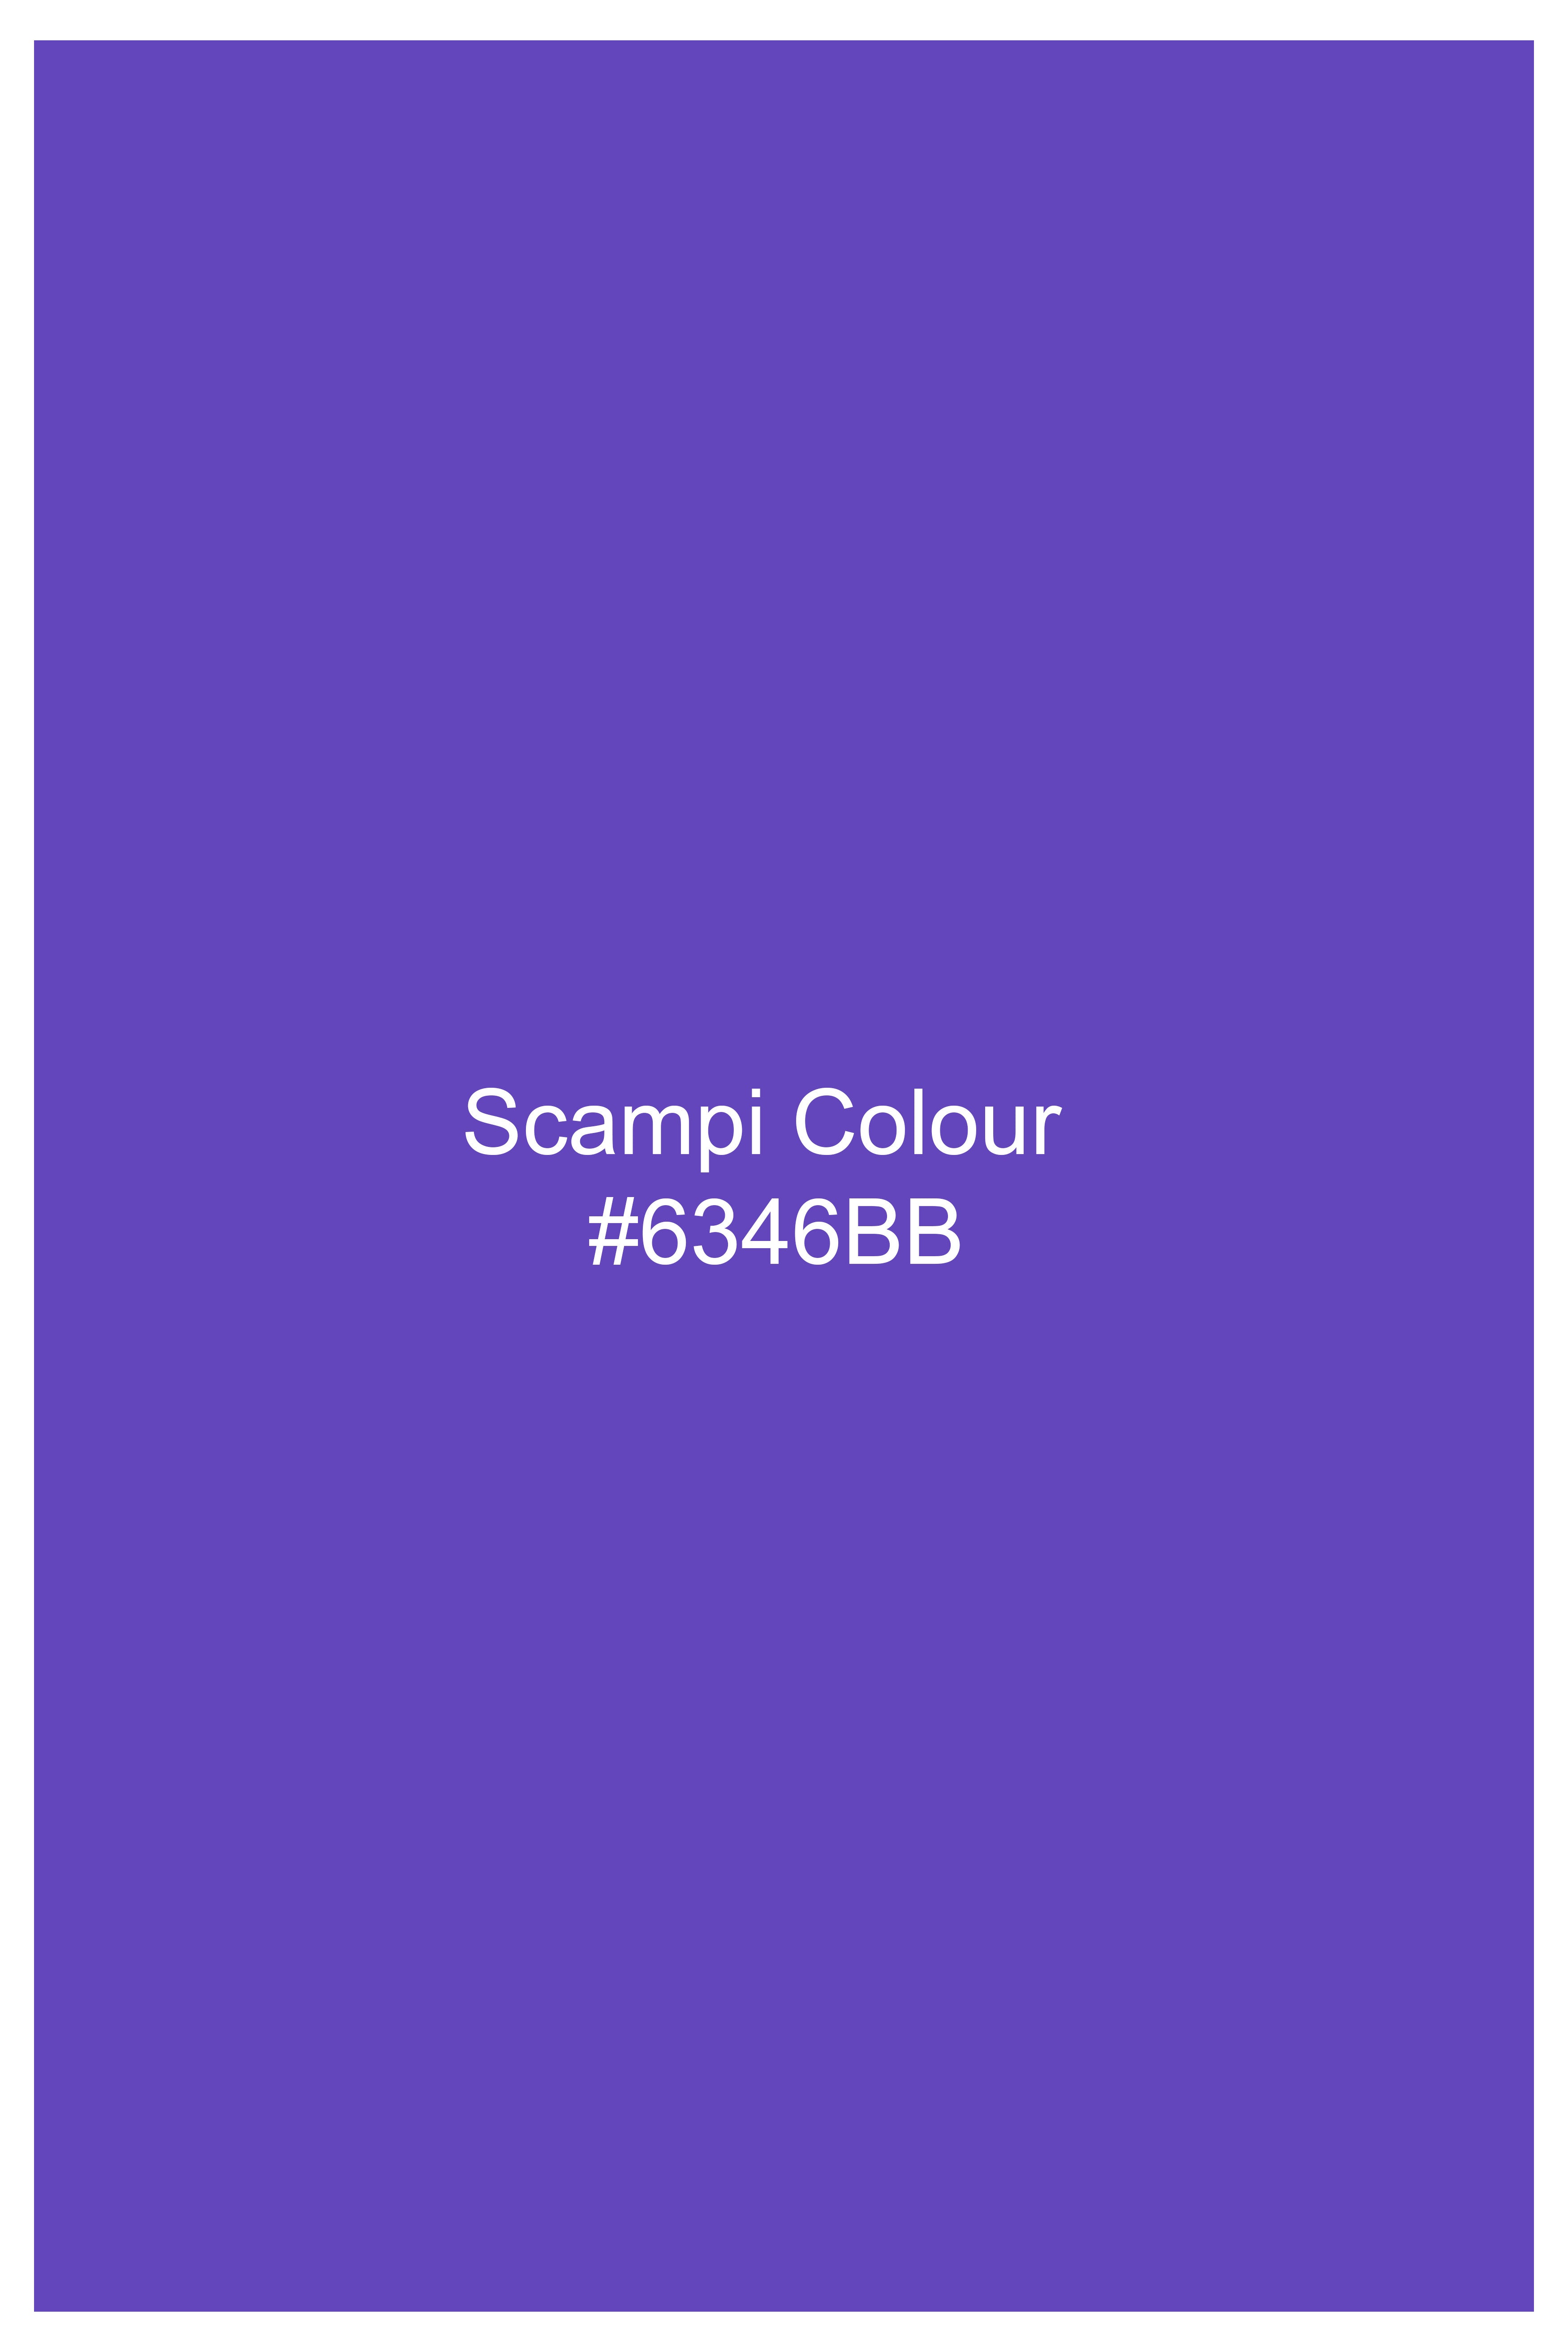 Scampi Purple Hand Painted Luxurious Linen Designer Shirt 6292-BD-ART-38, 6292-BD-ART-H-38, 6292-BD-ART-39, 6292-BD-ART-H-39, 6292-BD-ART-40, 6292-BD-ART-H-40, 6292-BD-ART-42, 6292-BD-ART-H-42, 6292-BD-ART-44, 6292-BD-ART-H-44, 6292-BD-ART-46, 6292-BD-ART-H-46, 6292-BD-ART-48, 6292-BD-ART-H-48, 6292-BD-ART-50, 6292-BD-ART-H-50, 6292-BD-ART-52, 6292-BD-ART-H-52